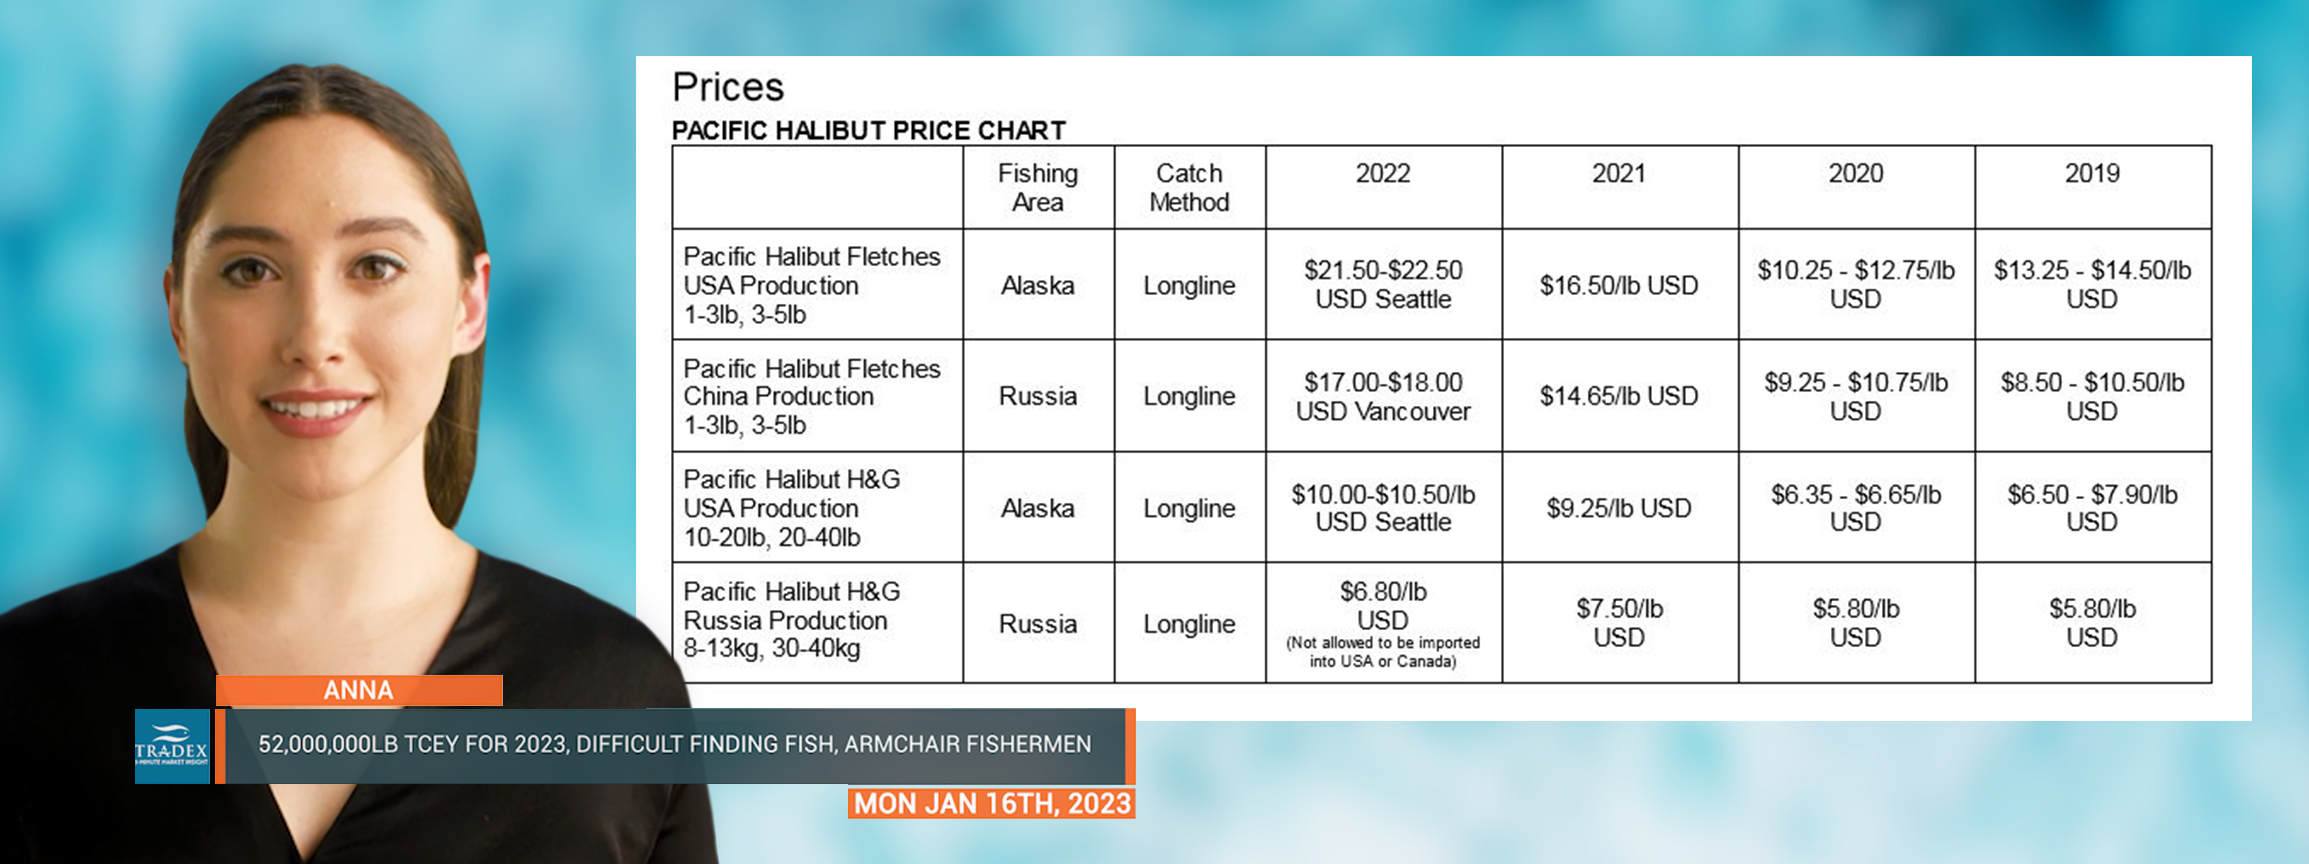 Pacific Halibut Price Chart